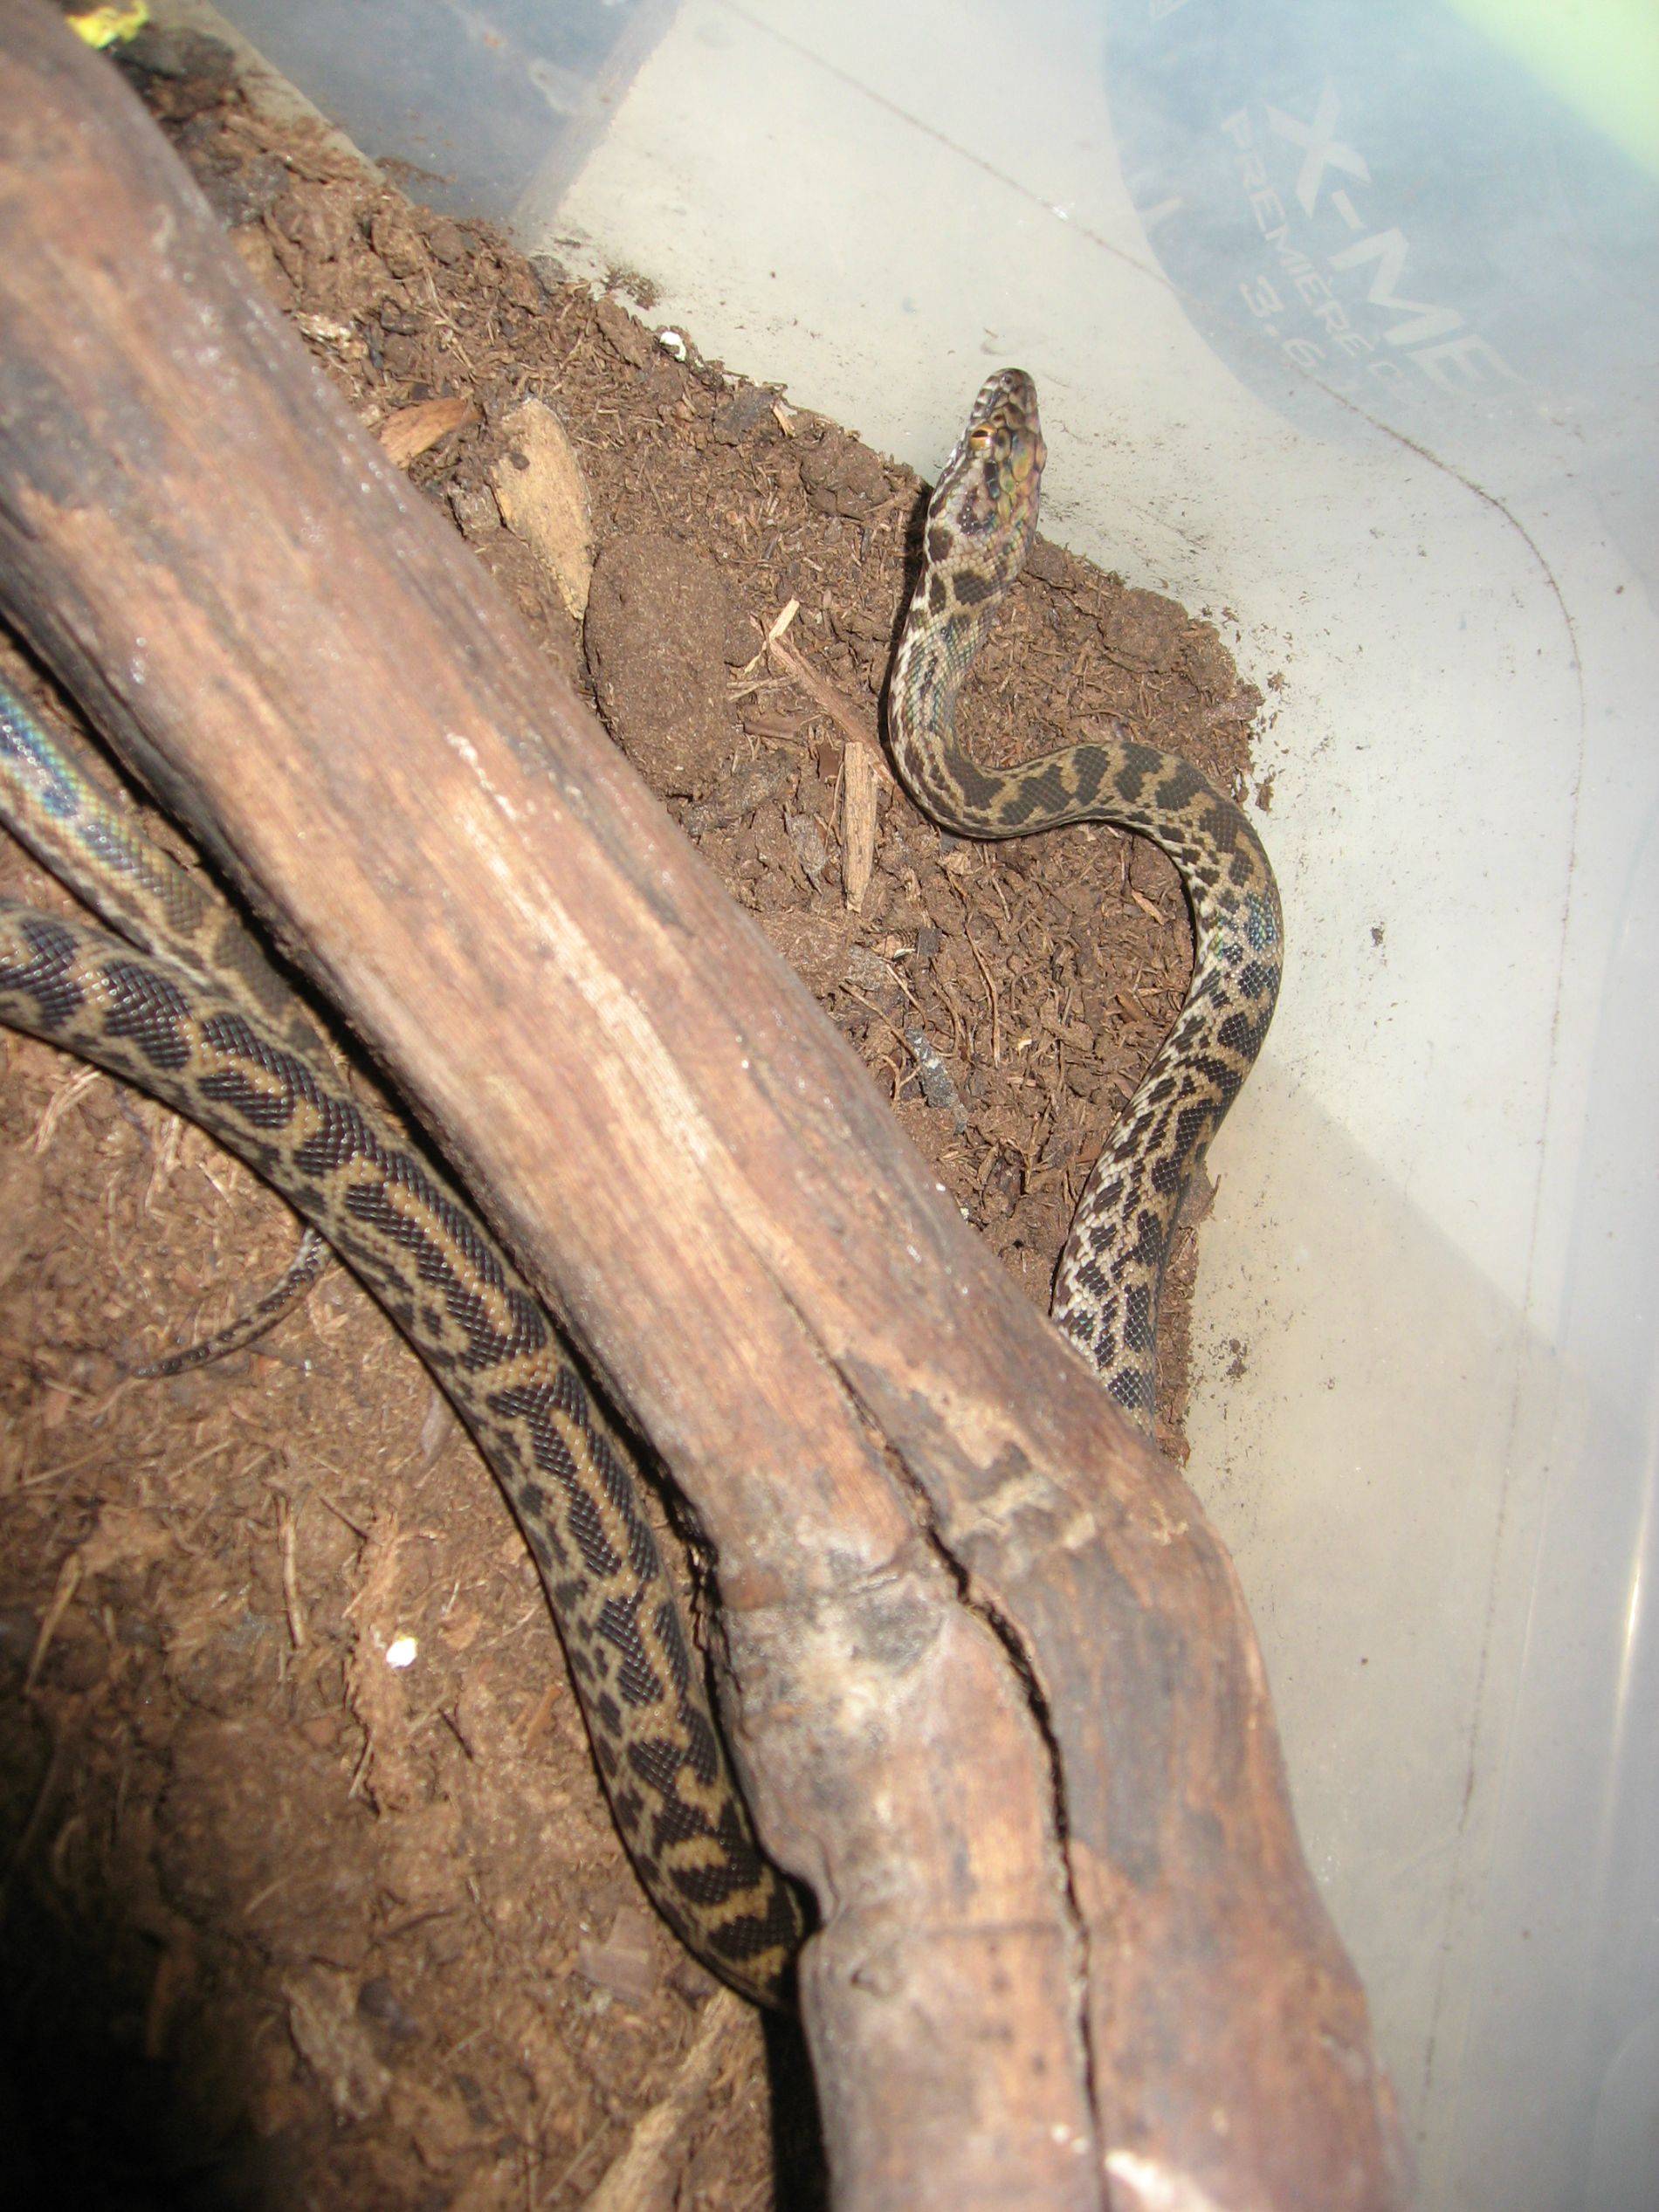 08 - spotted python.jpg